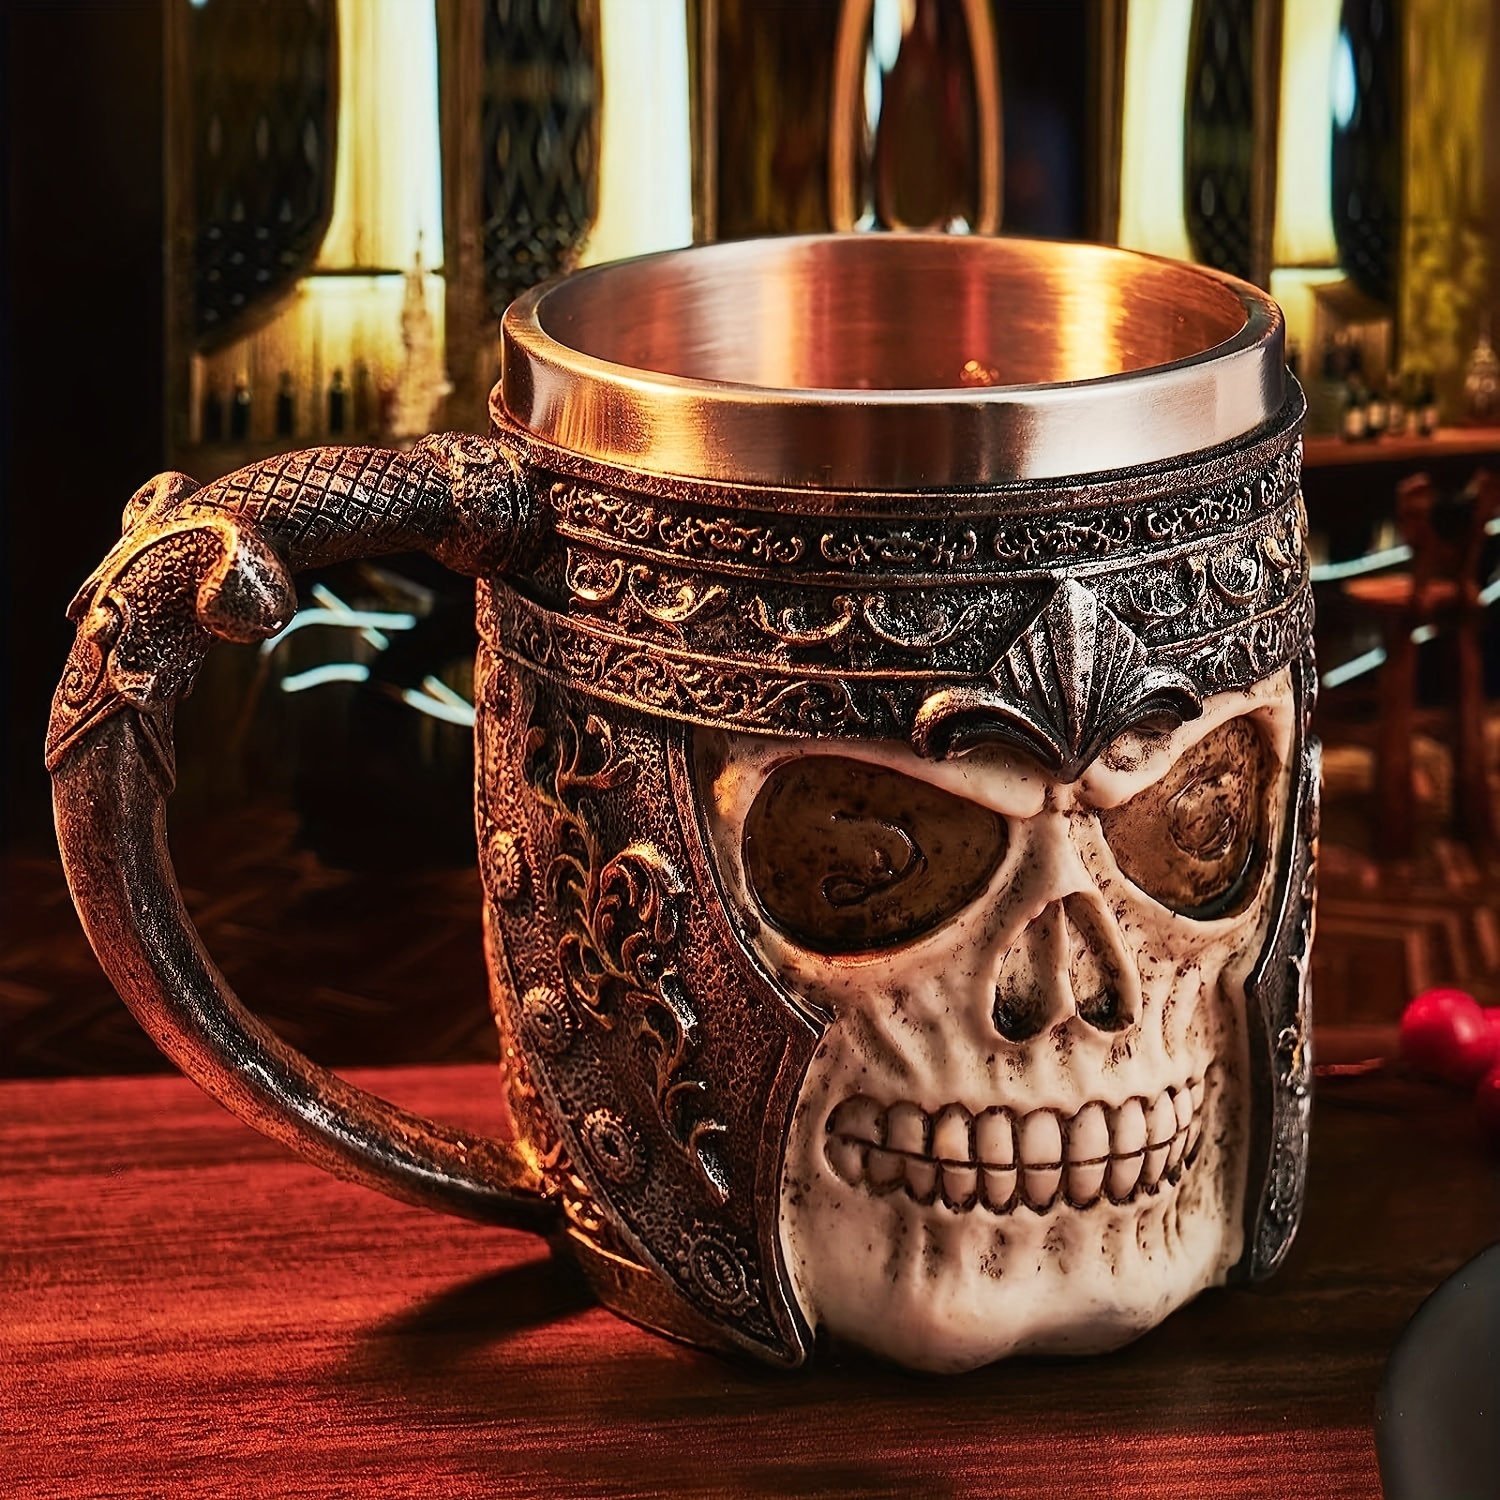 Skull and Bones Design Stainless Steel Coffee Mug Halloween Cup Gothic Drinkware